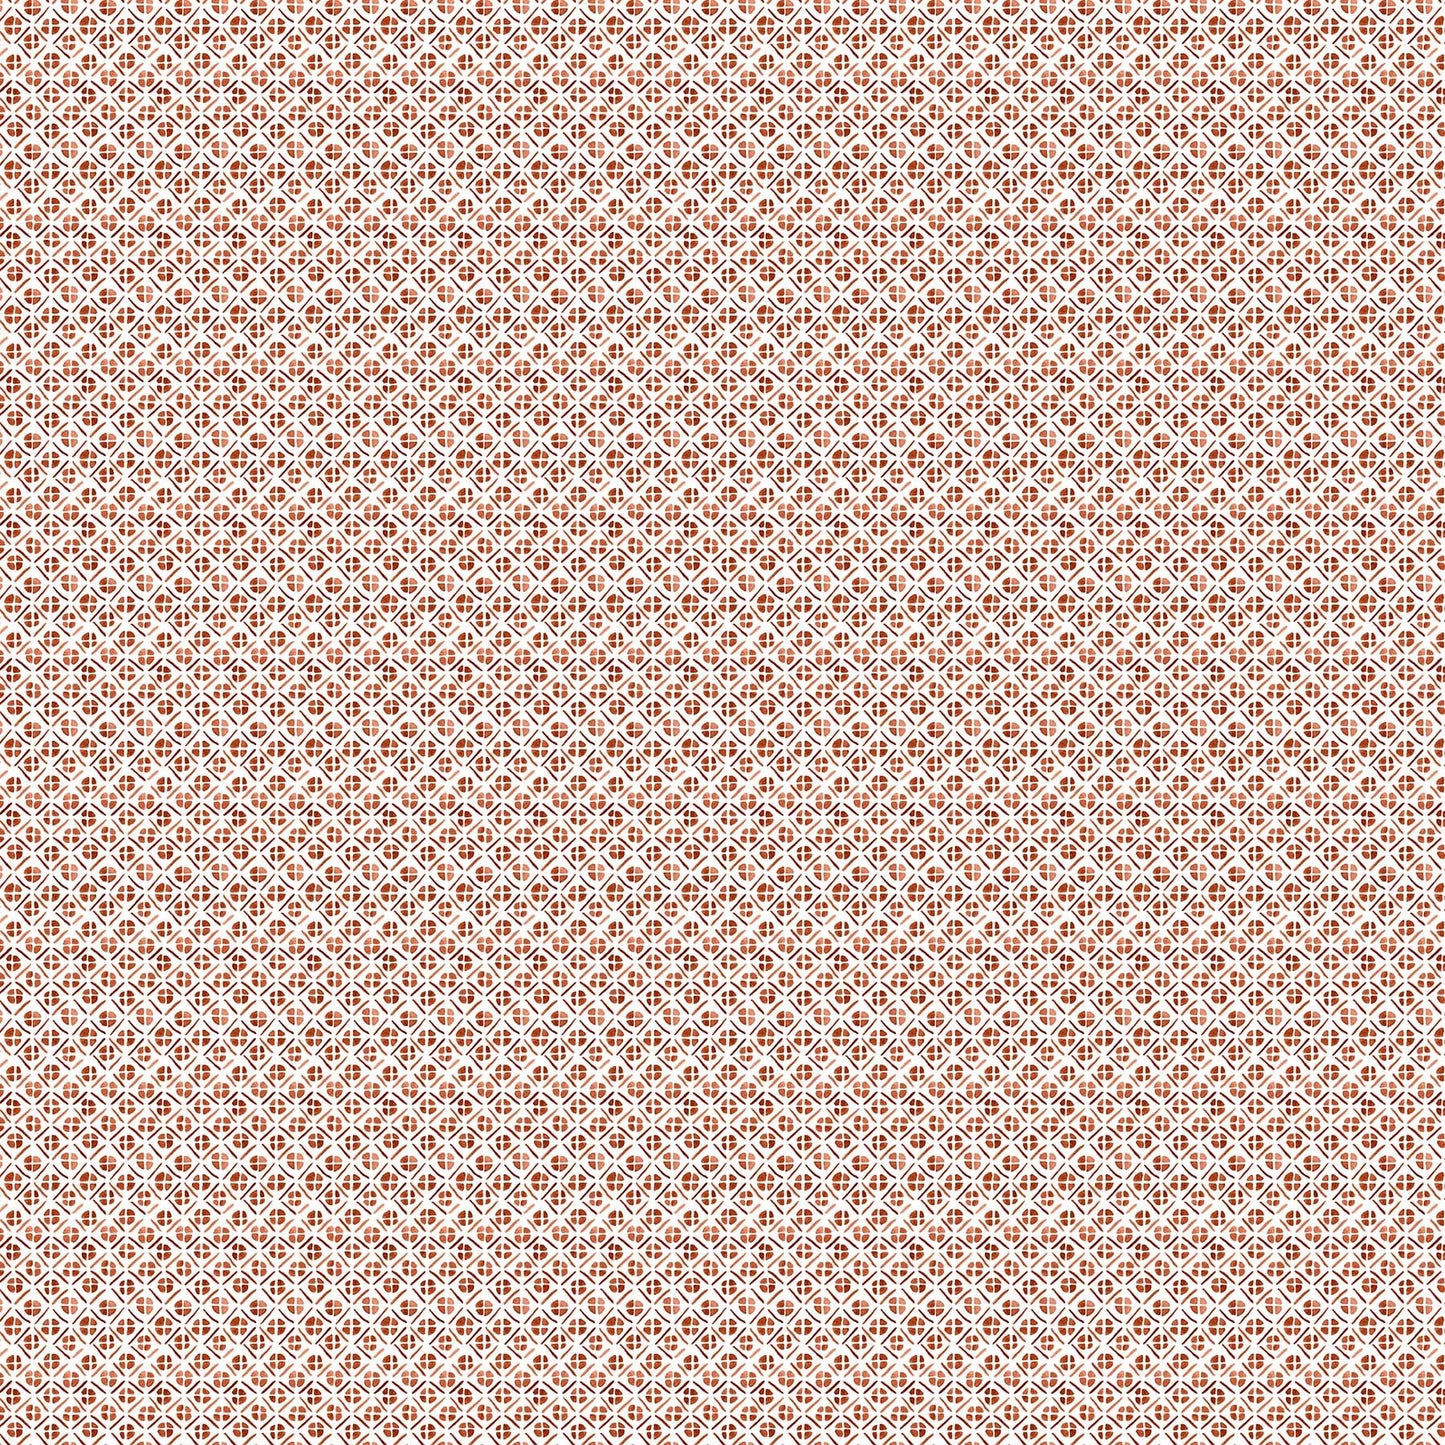 Desert Wildnerness Red 90105-24 Cotton Woven Fabric